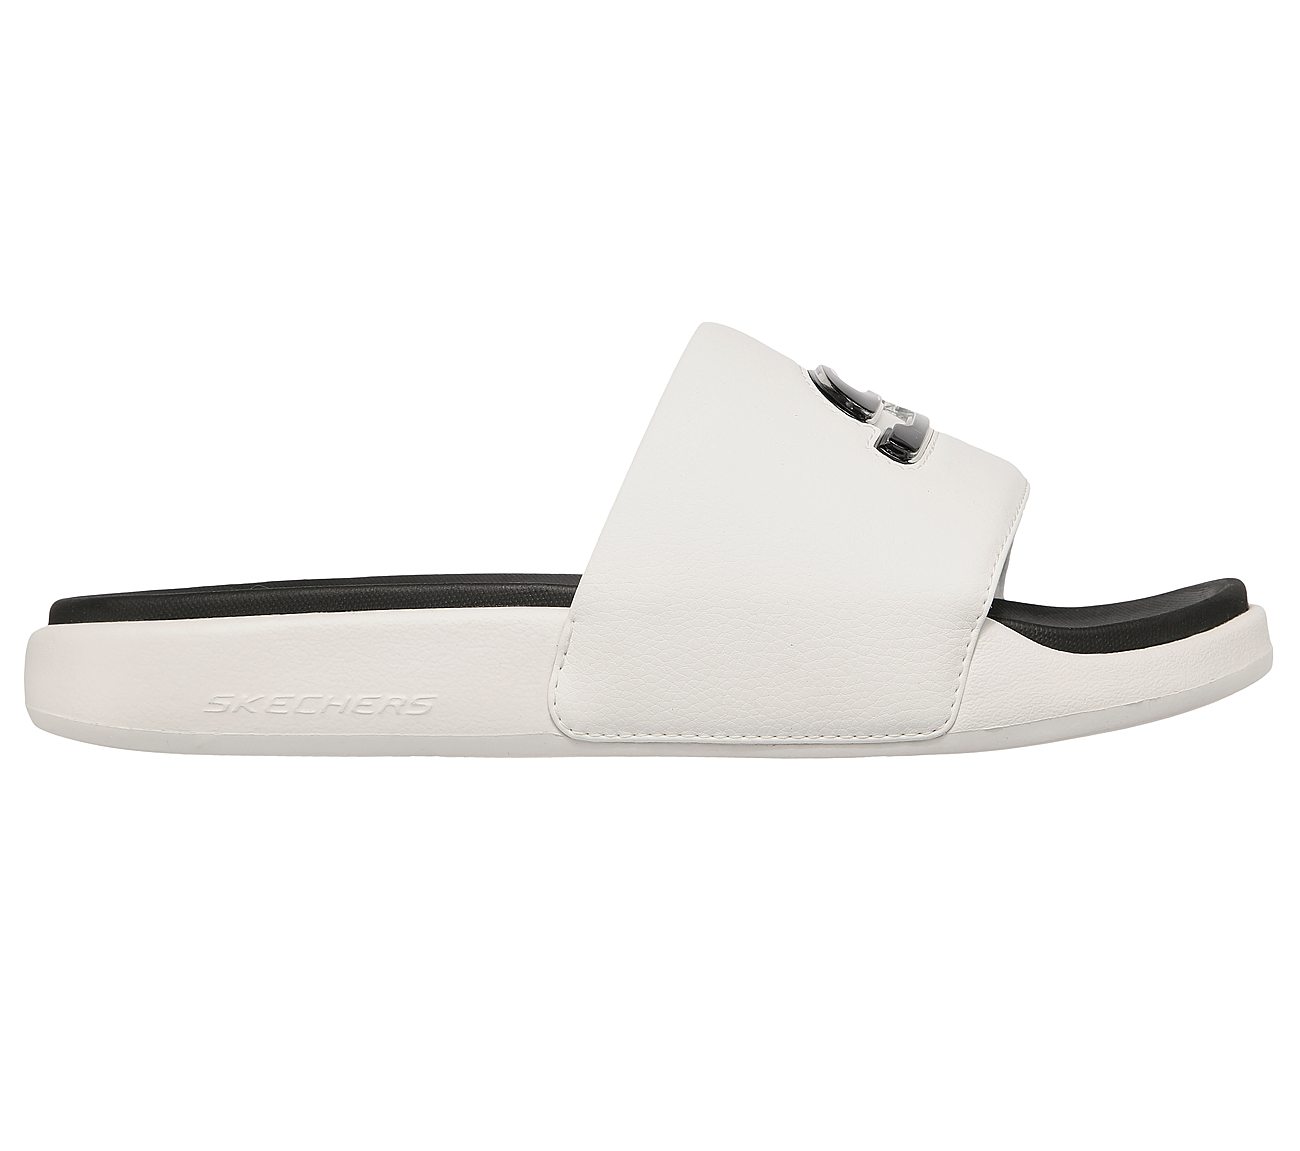 GAMBIX 2.0-UTOPO, WHITE BLACK Footwear Right View